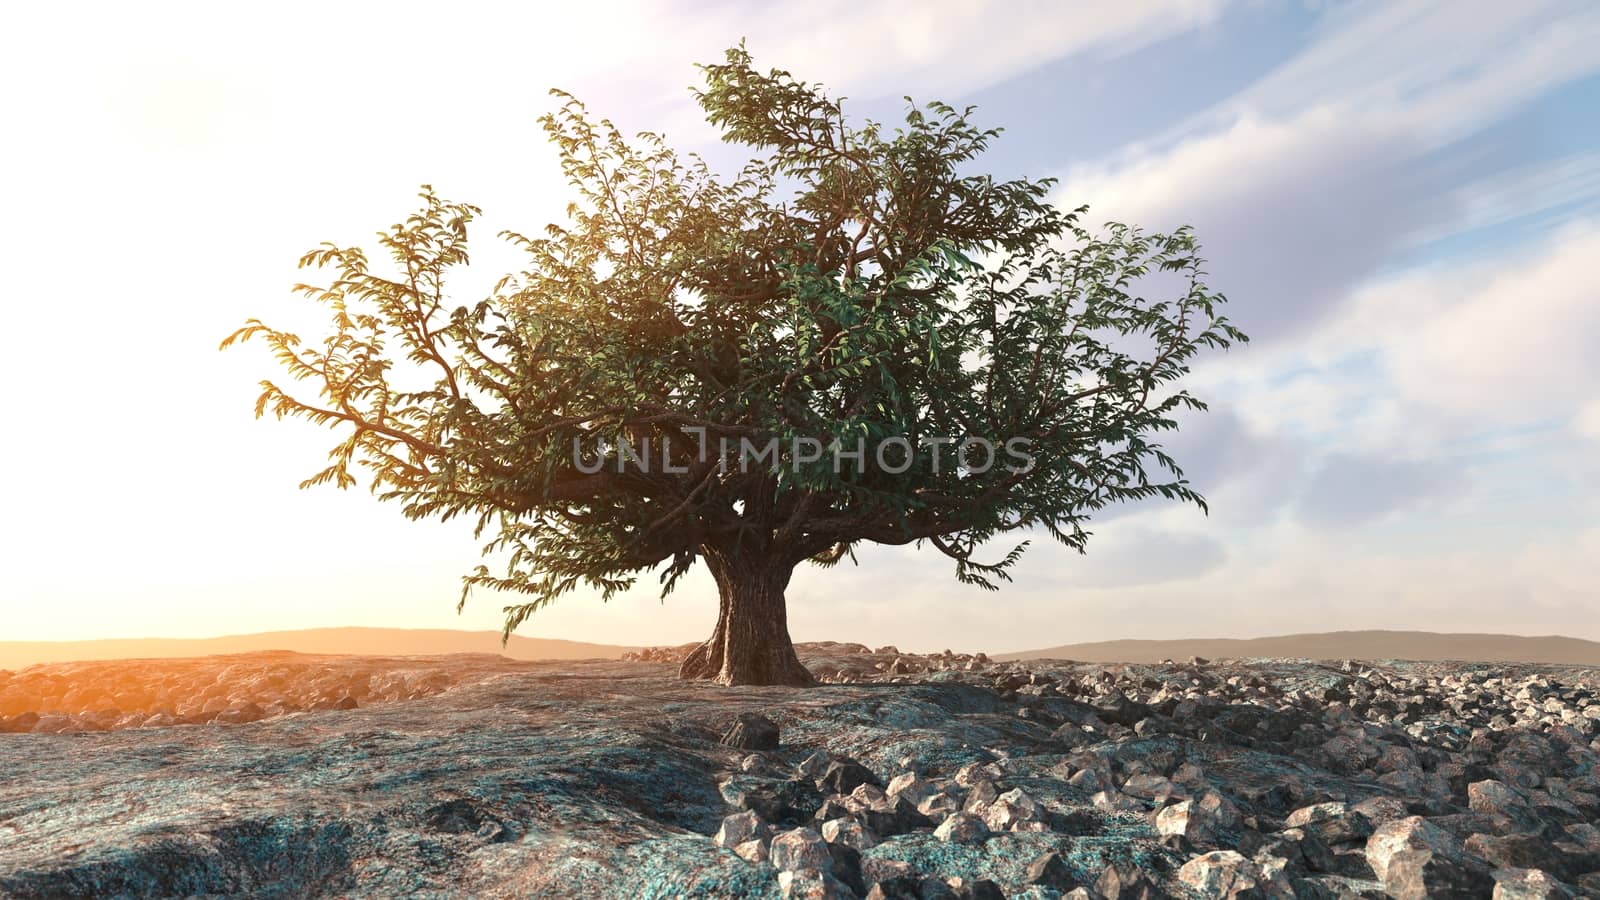 A single tree left in a desert rock landscape conceptual background by denisgo